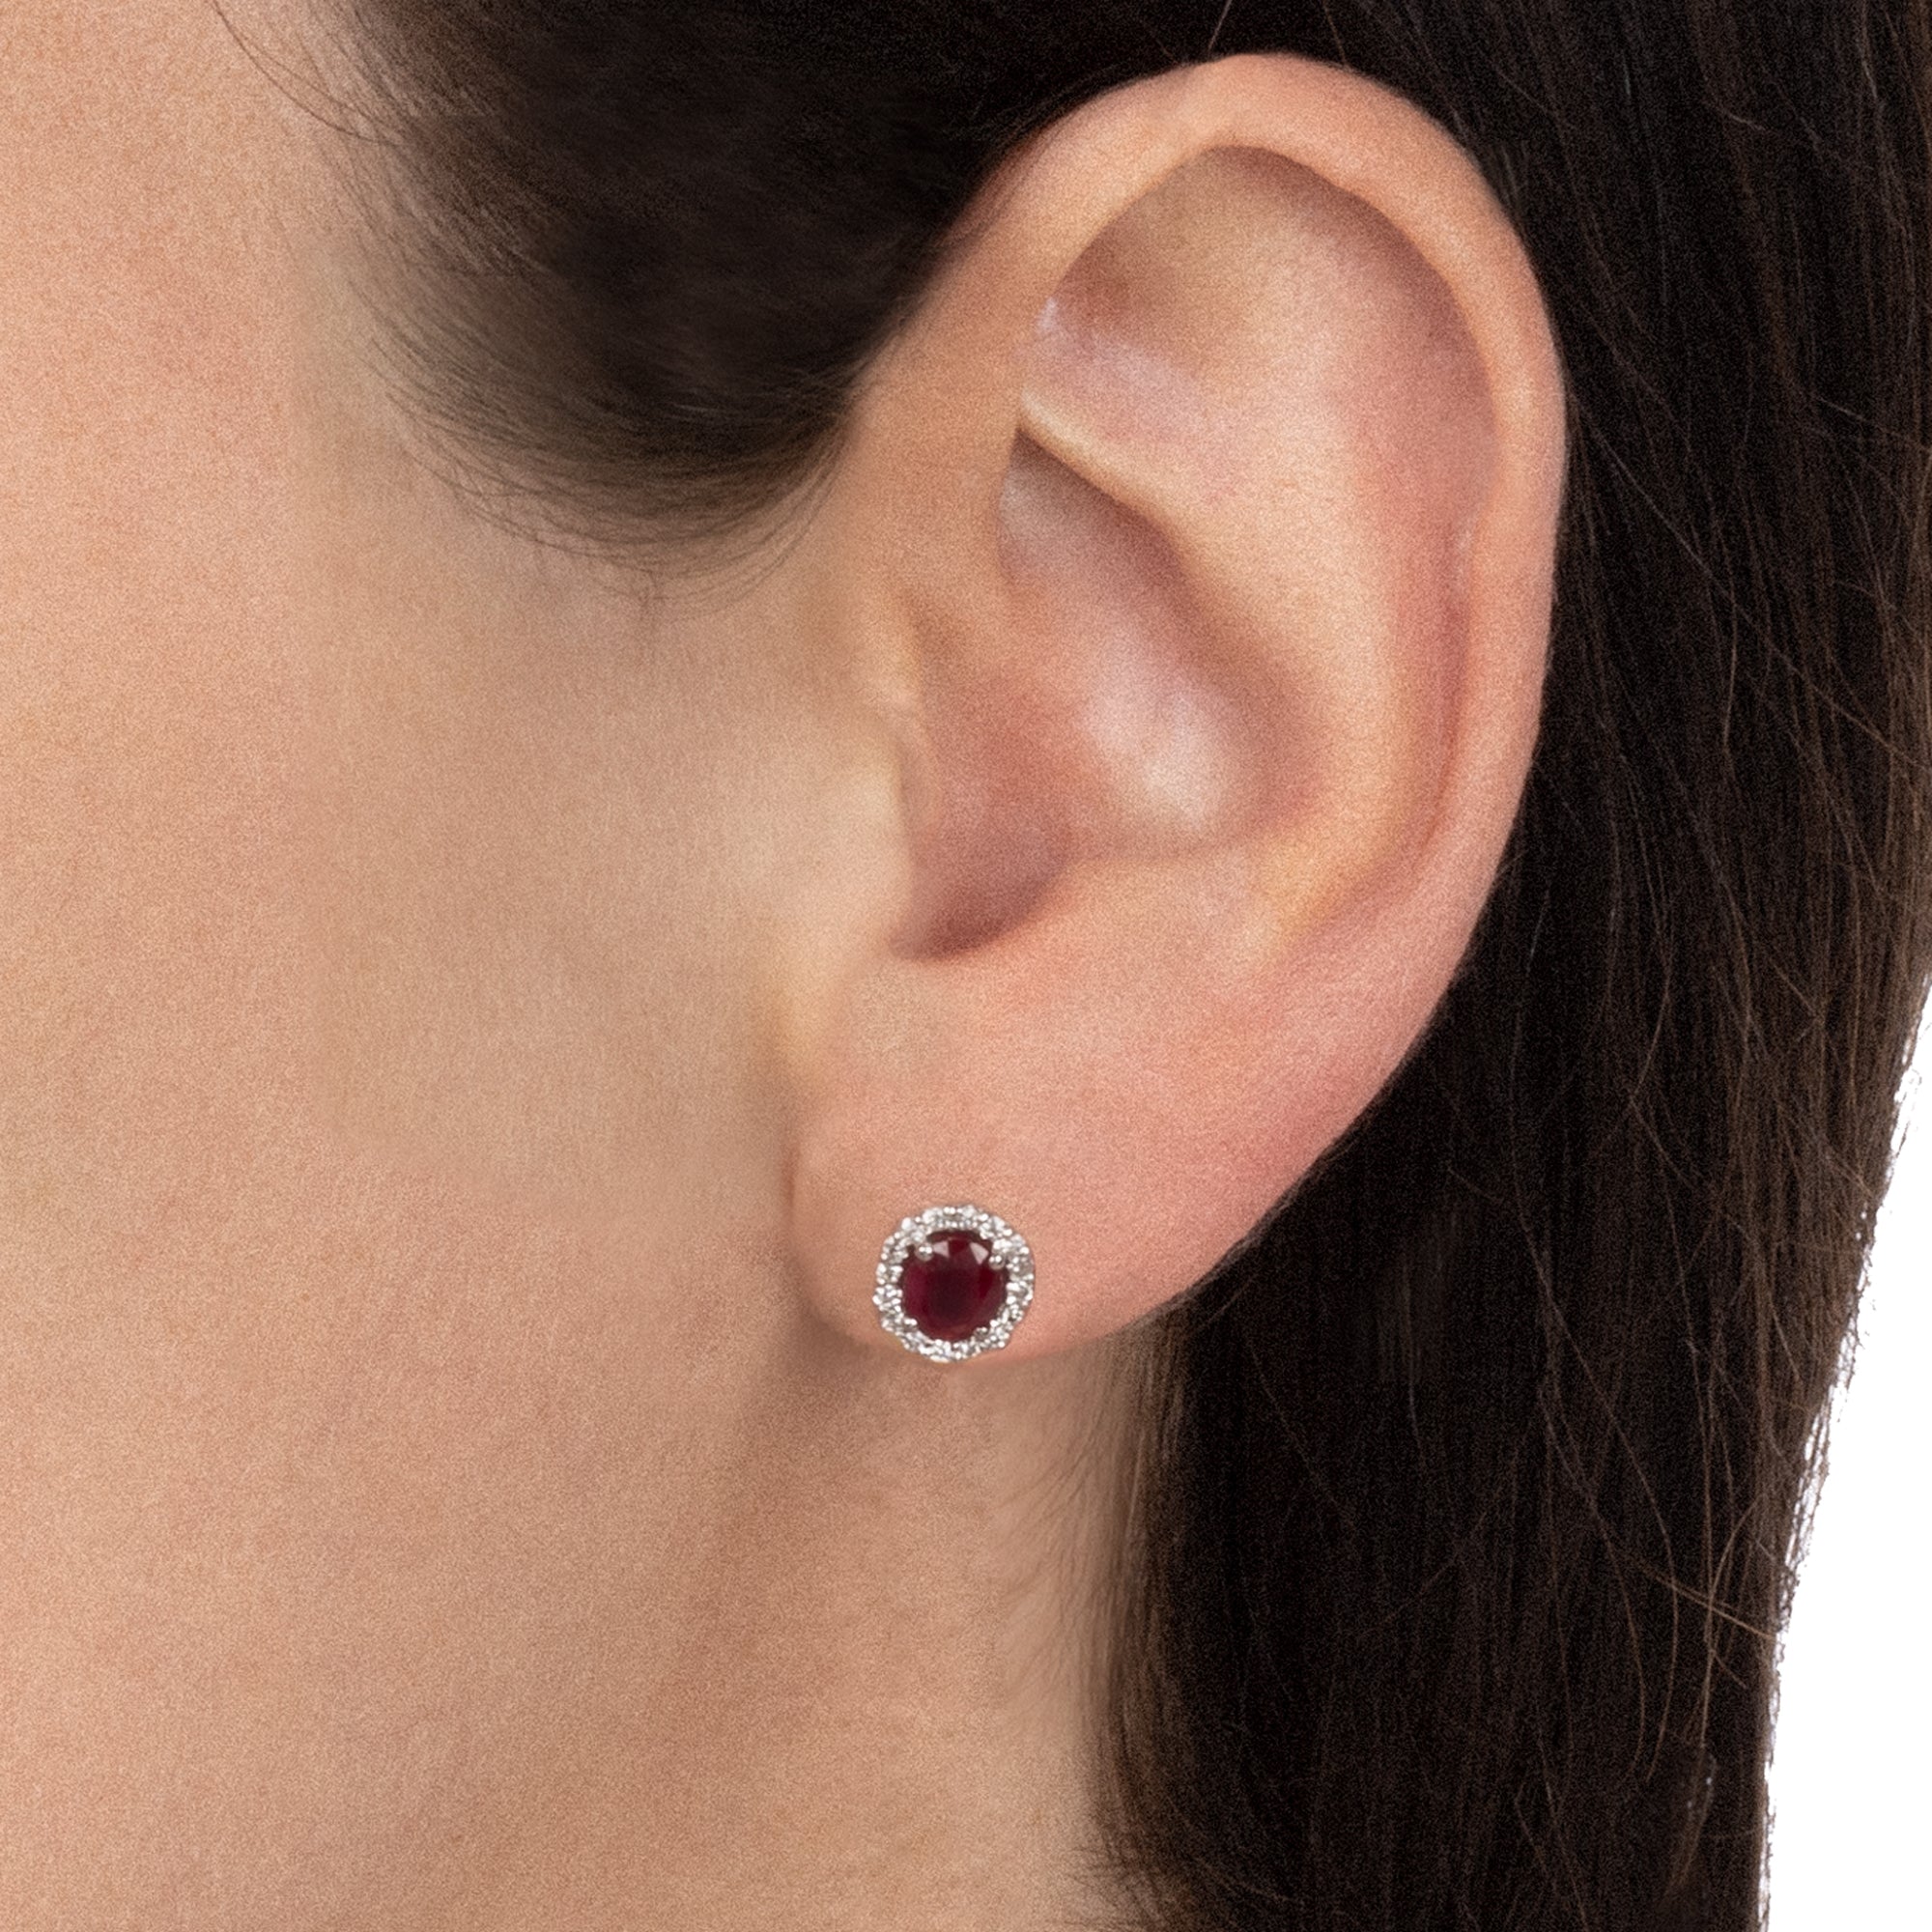 Earrings With Diamonds And Rubies